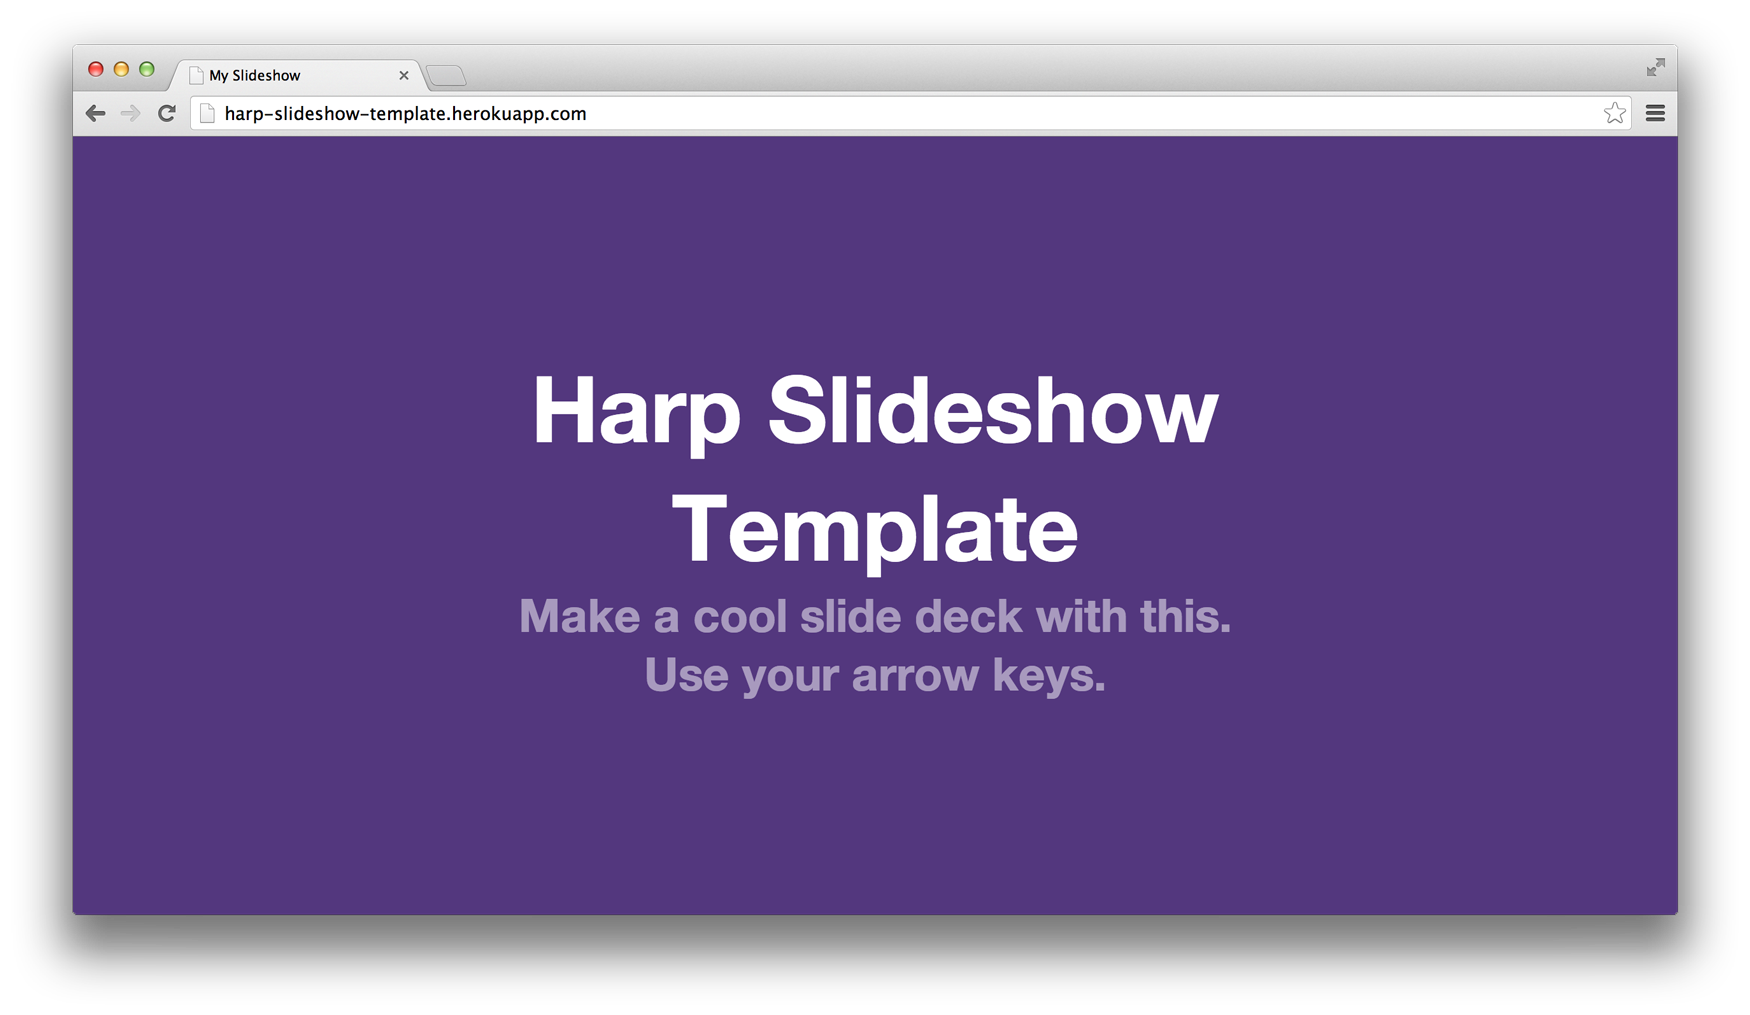 Harp slideshow template by @zeke